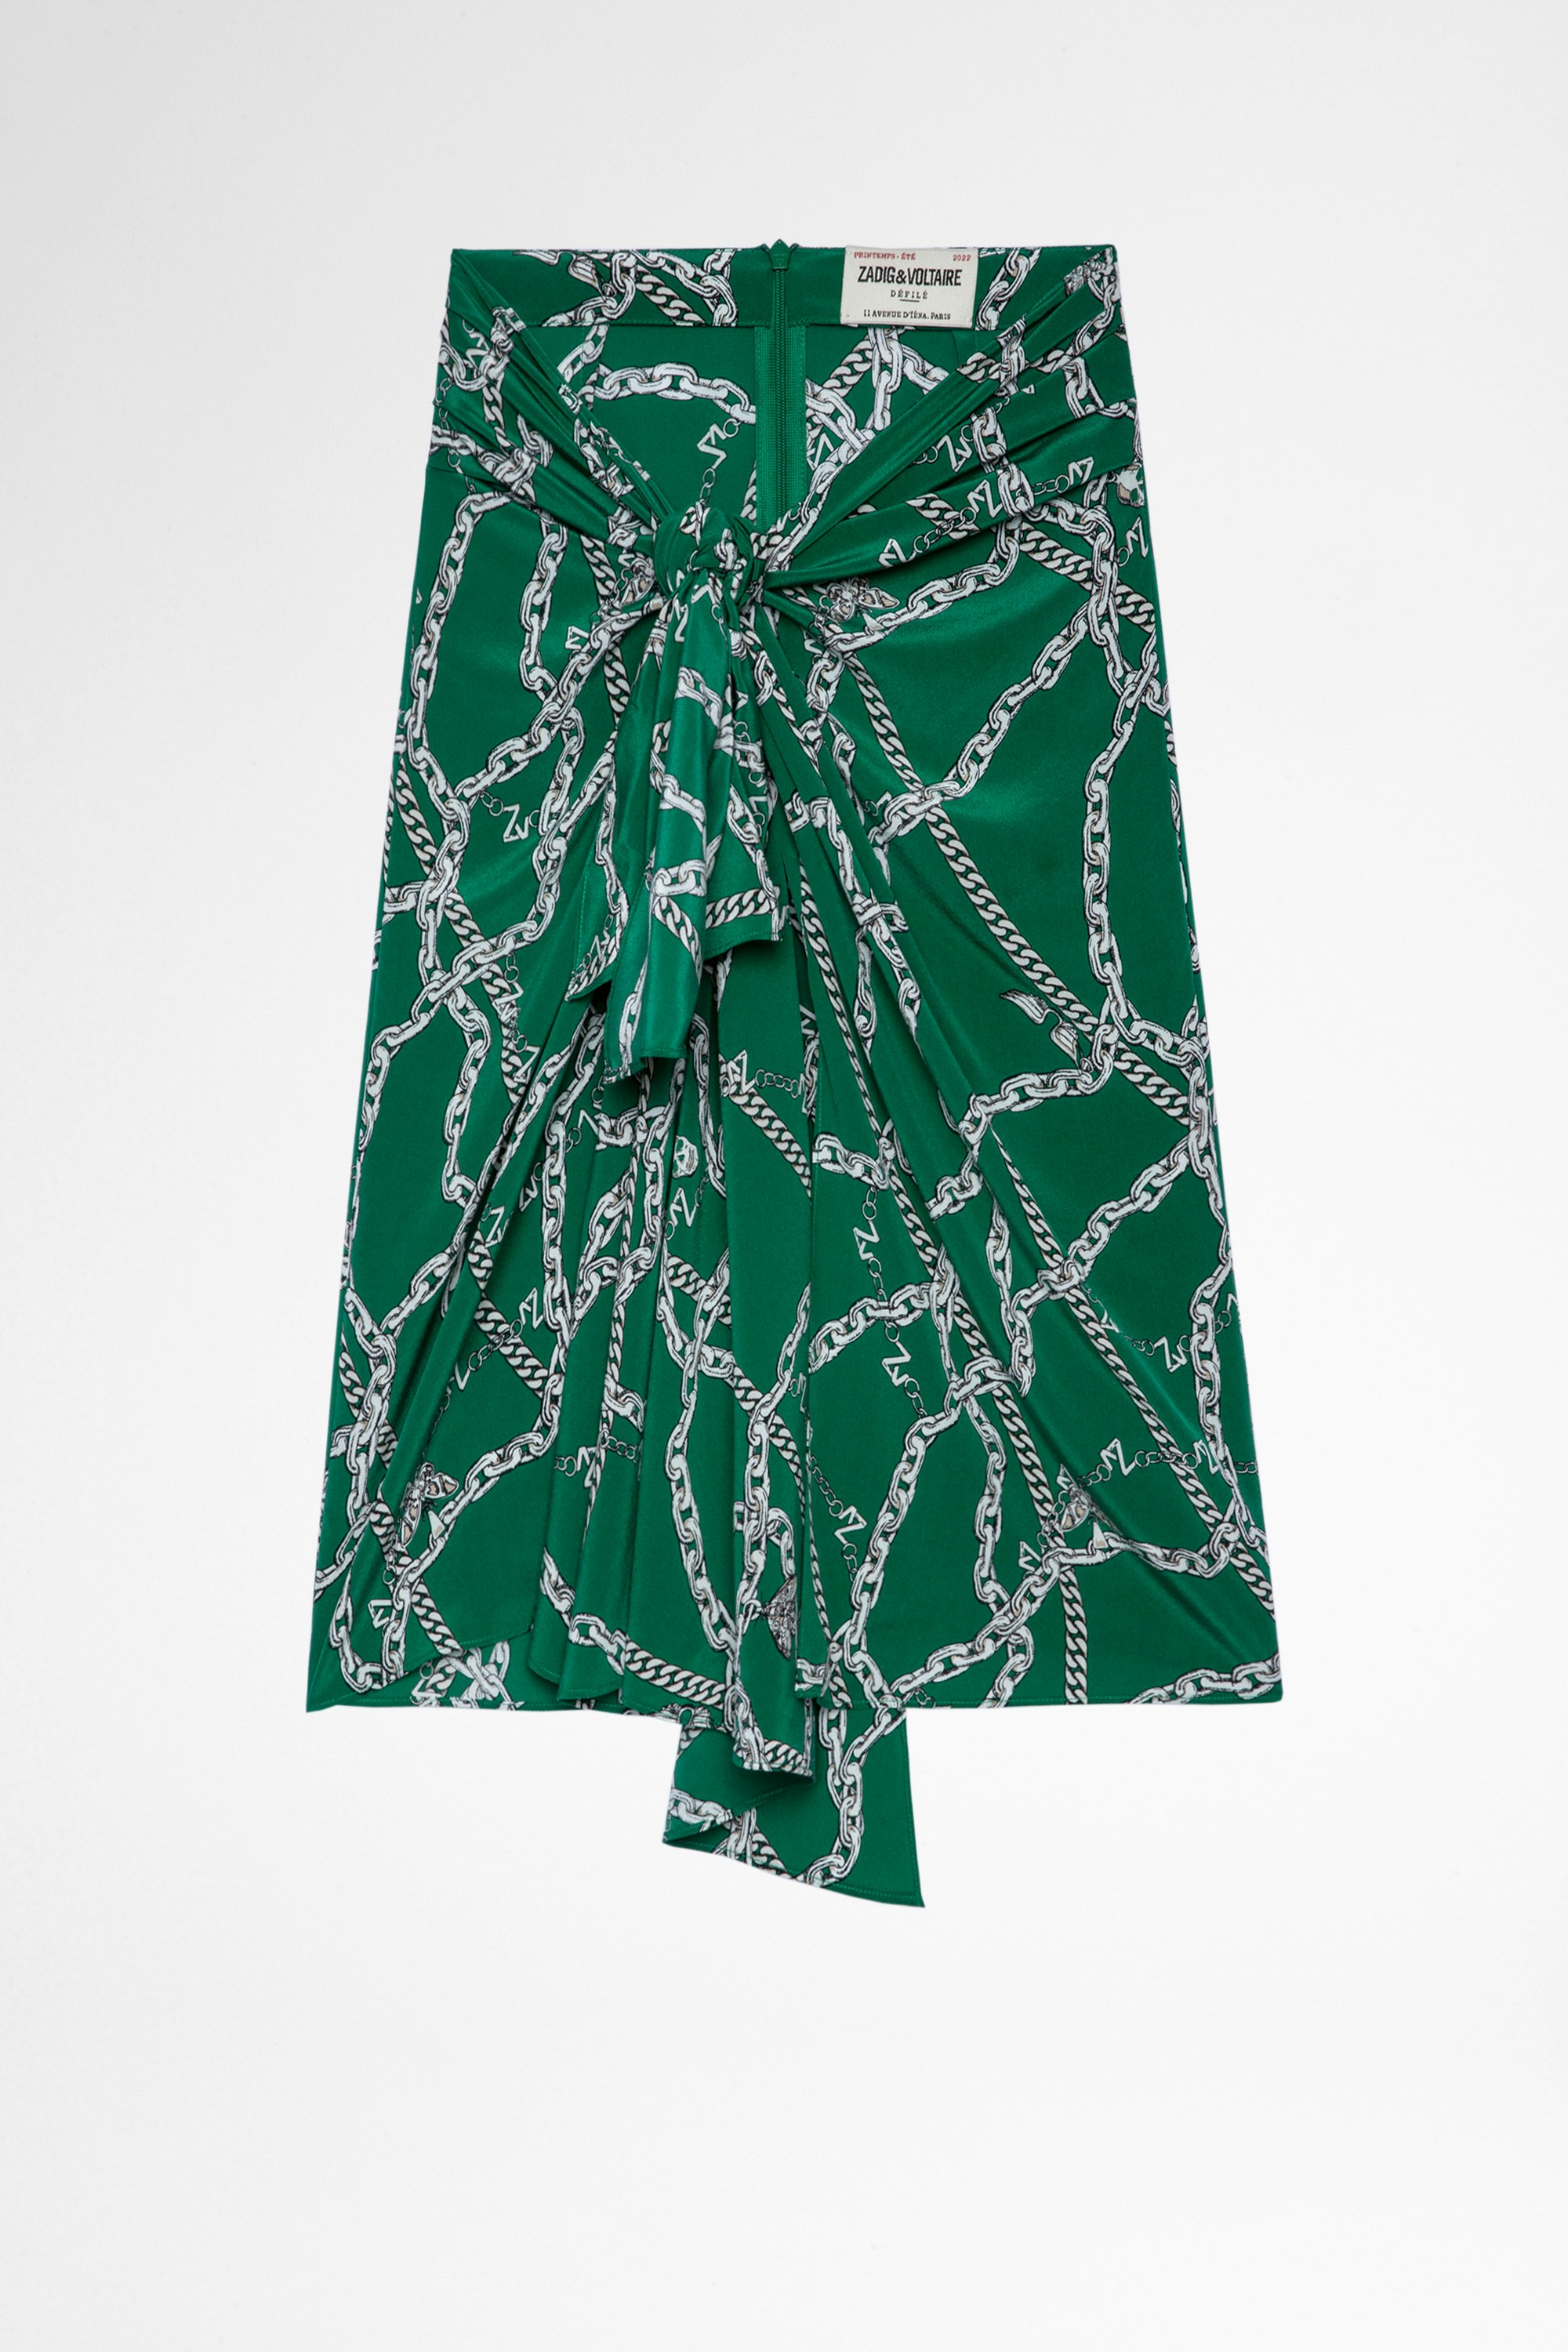 Jana シルクスカート Women's draped and knotted green silk skirt